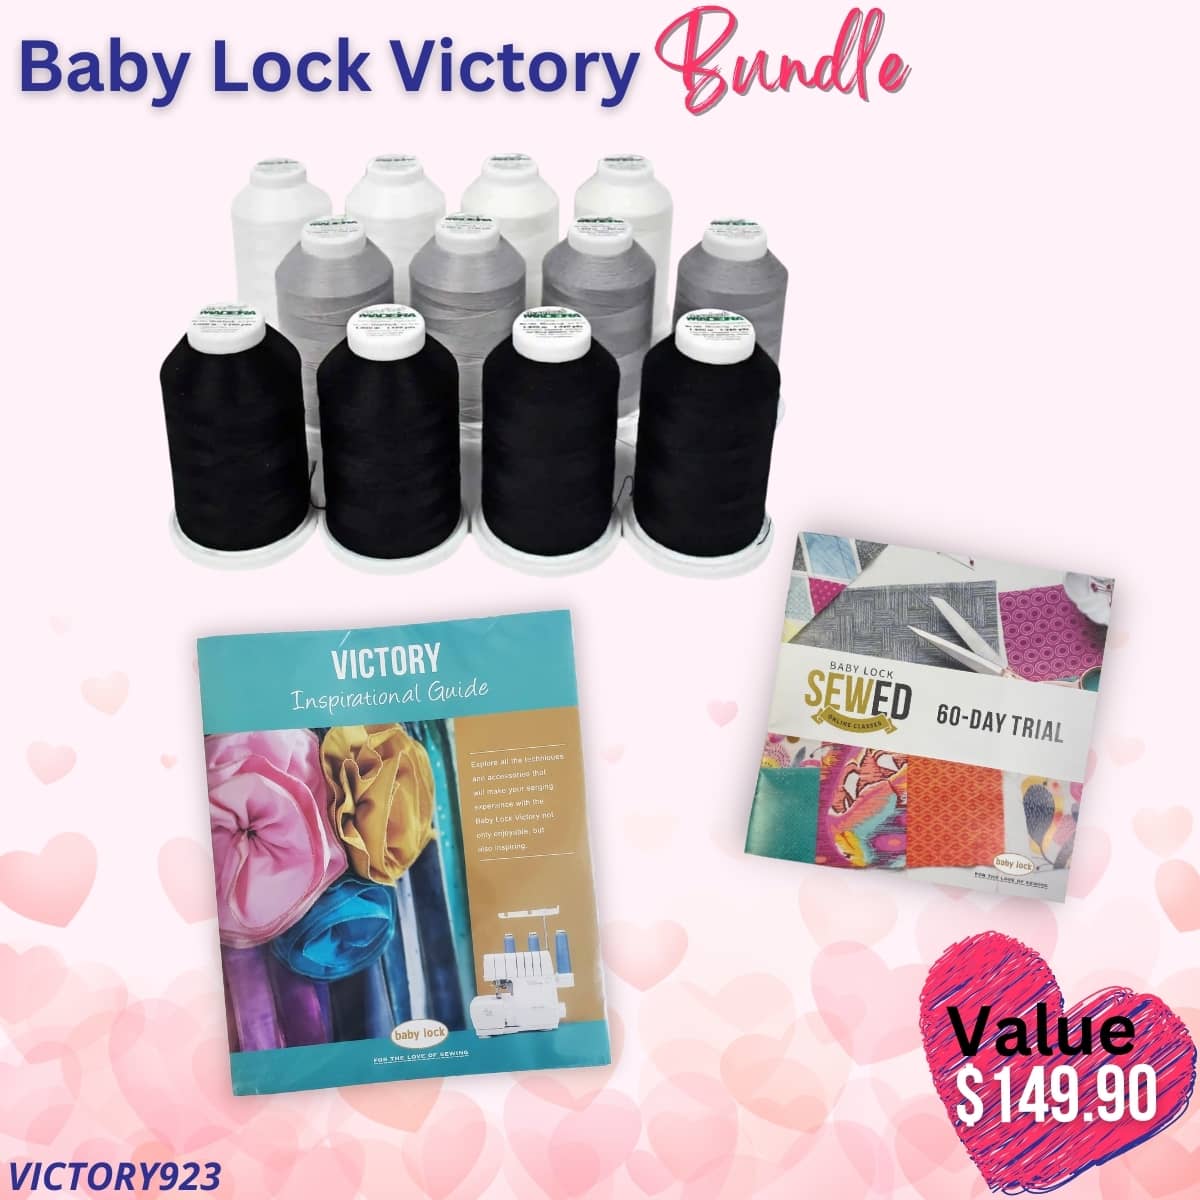 Baby Lock Victory bundle for Valentine's Sale